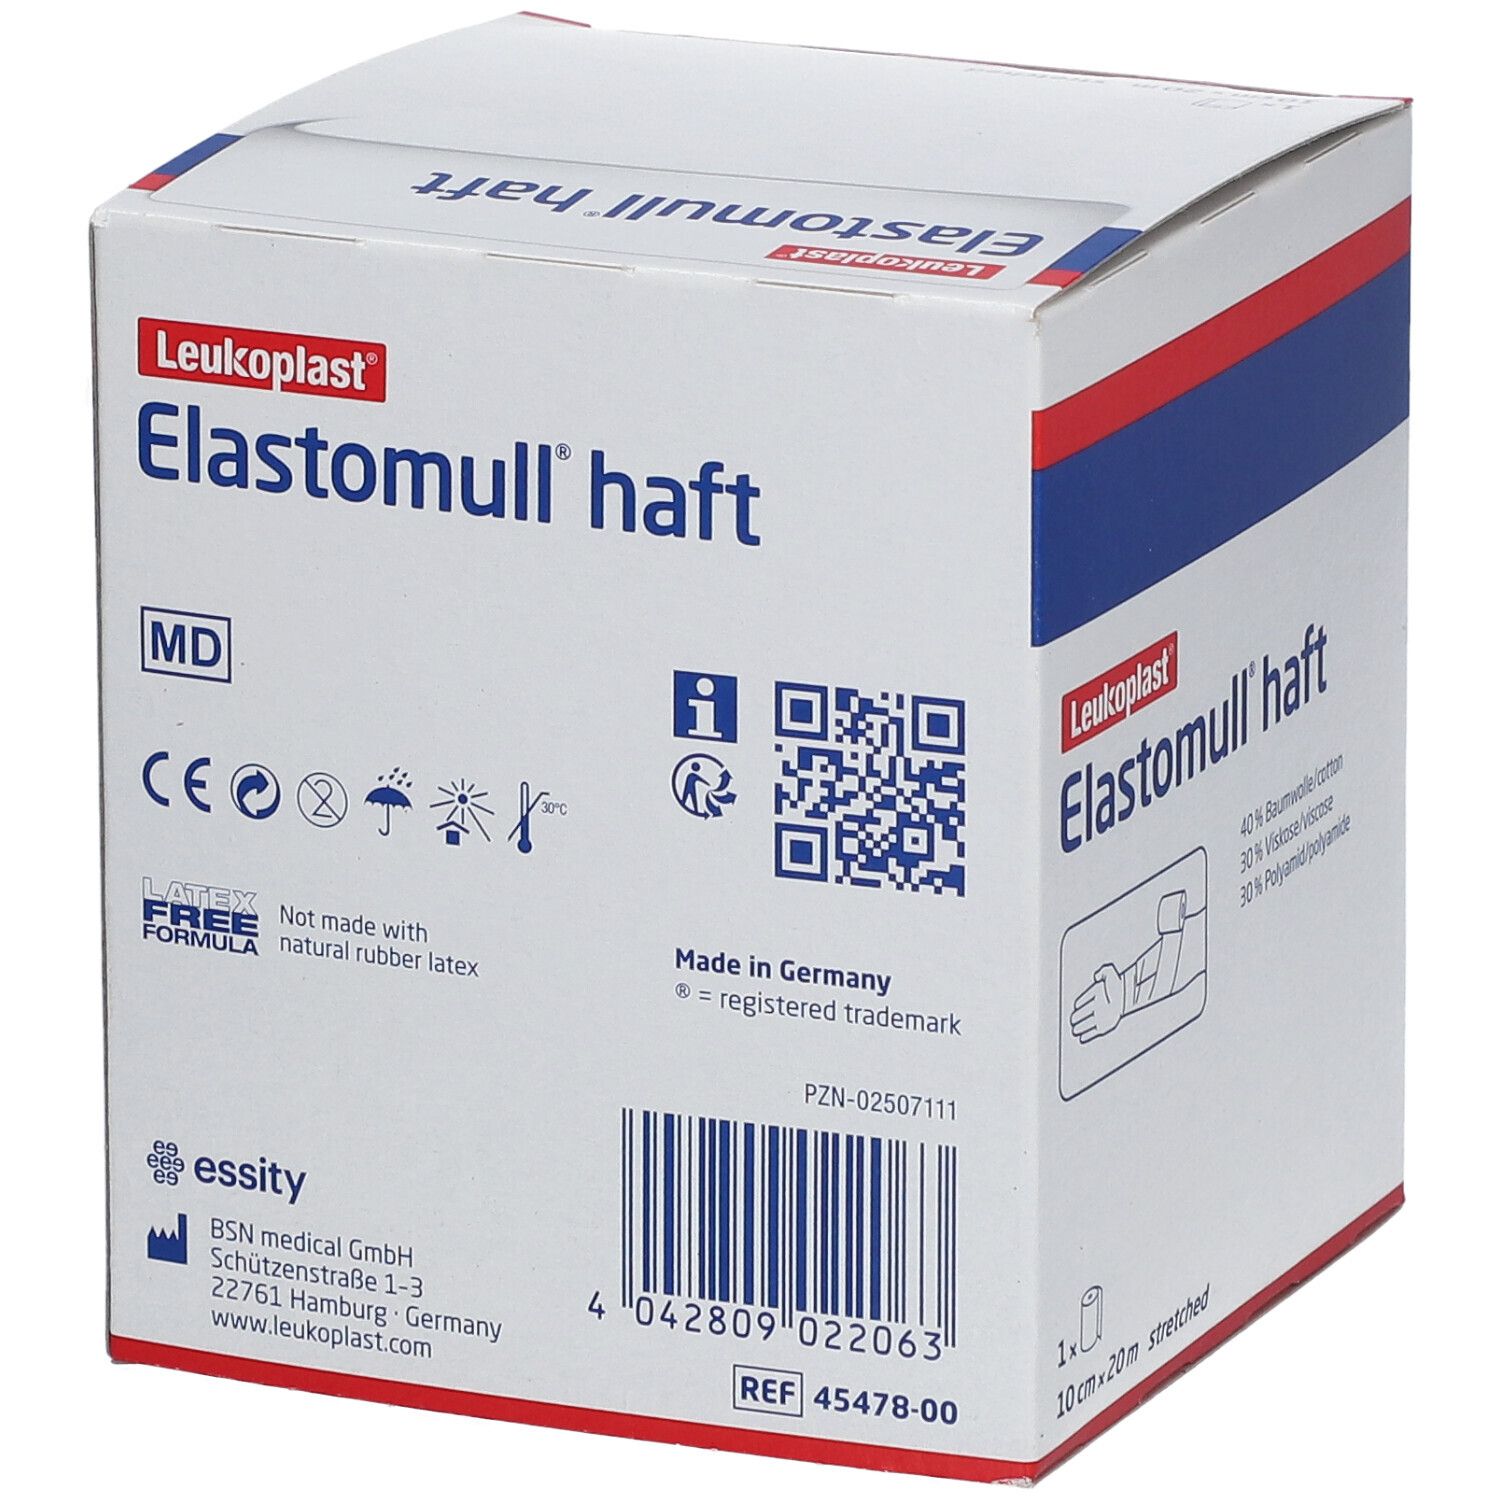 Elastomull® haft kohäsive elastische Fixierbinde 10 cm x 20 m